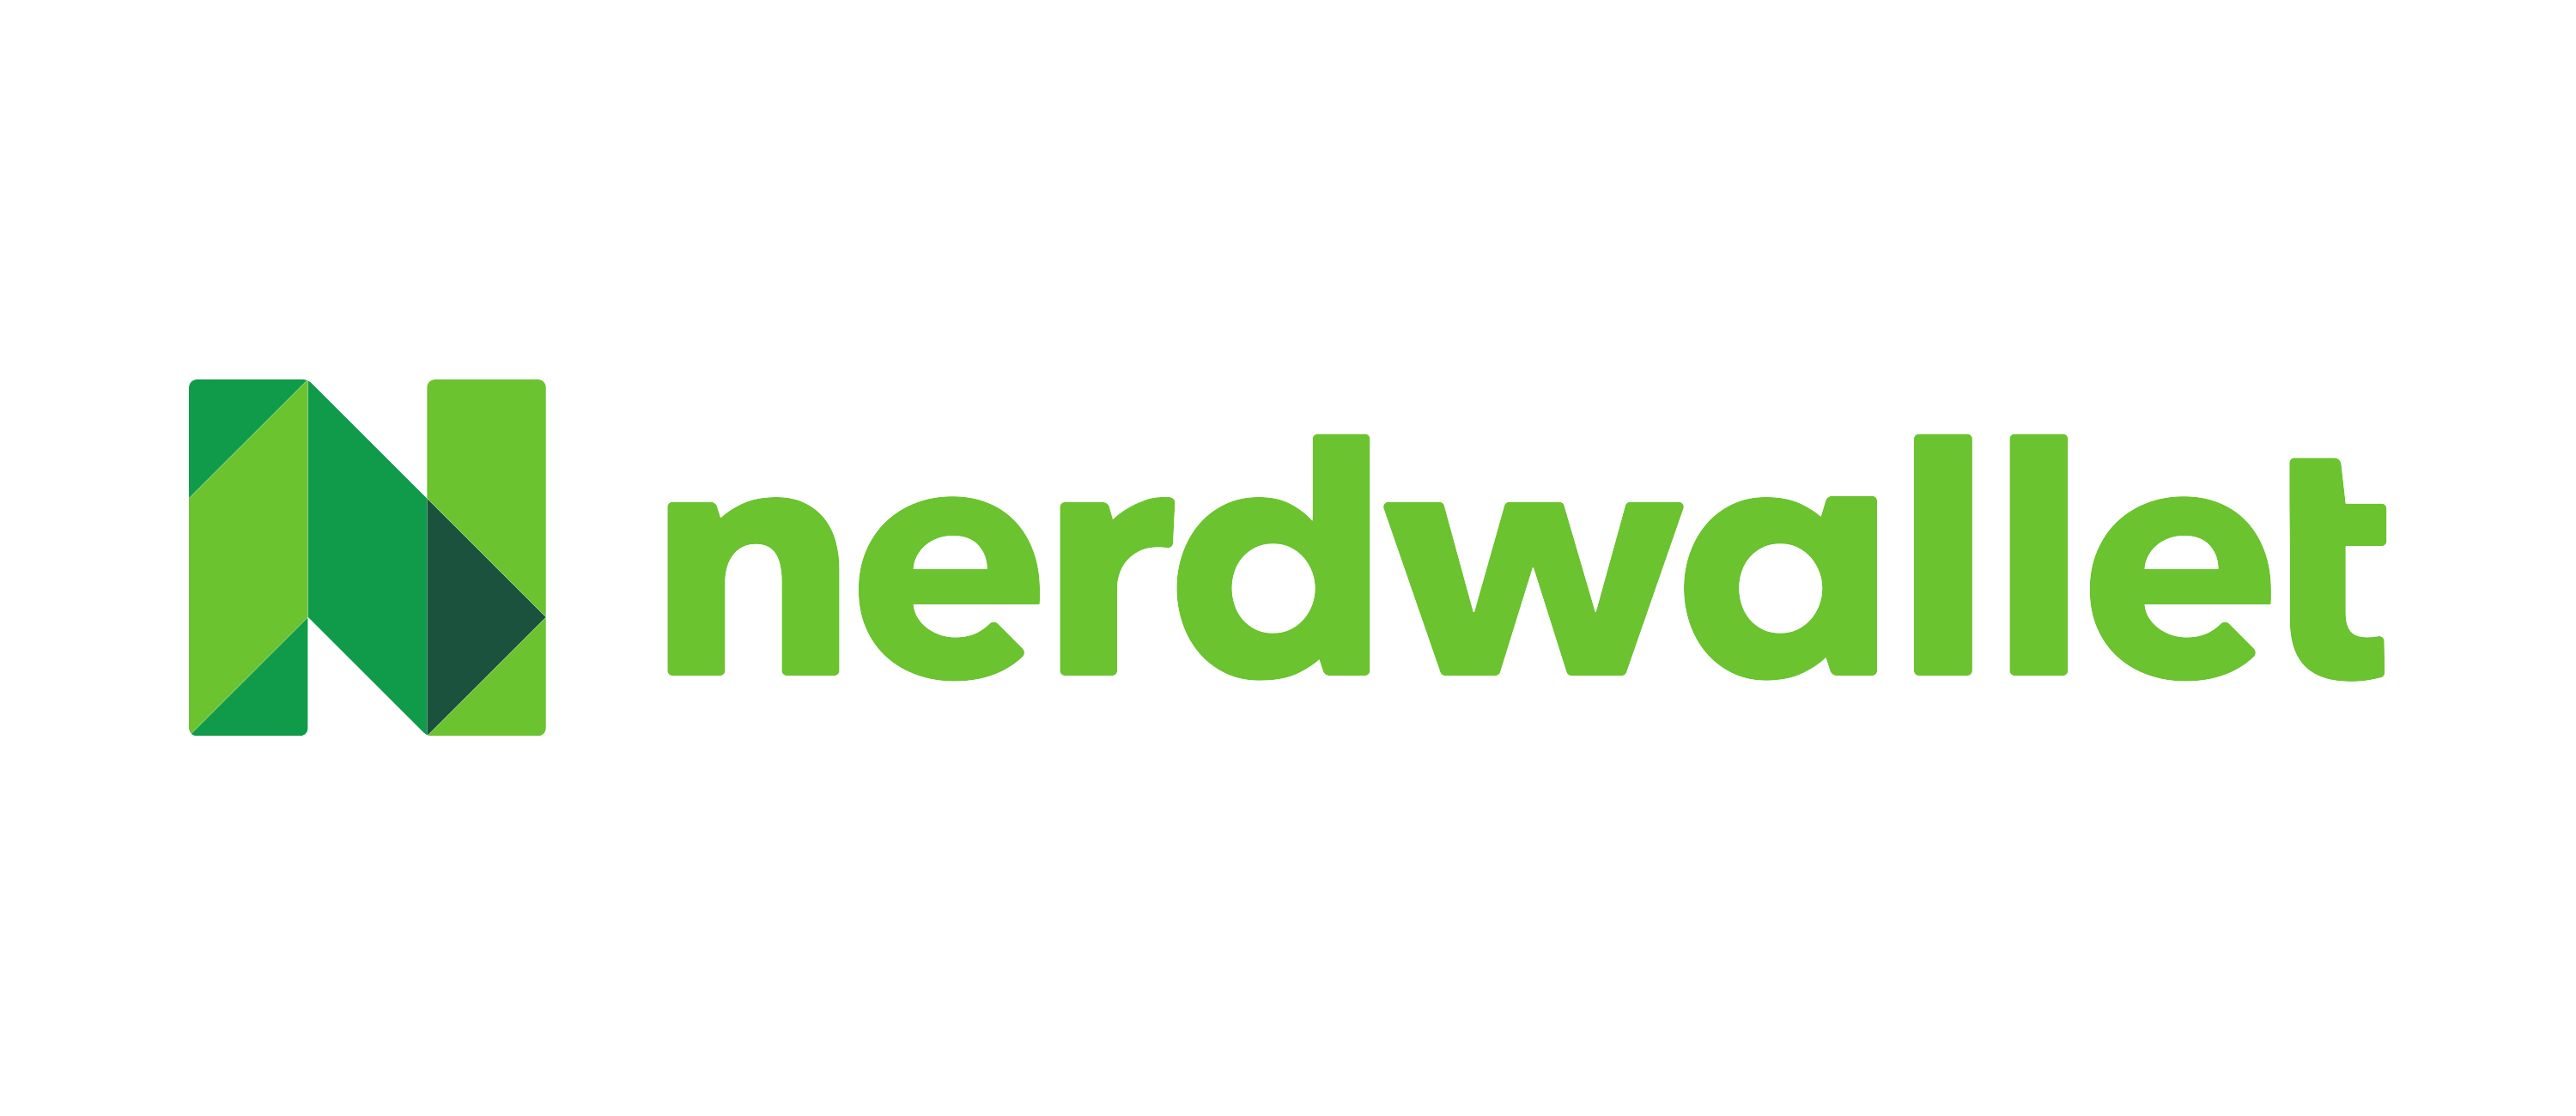 NerdWallet logo